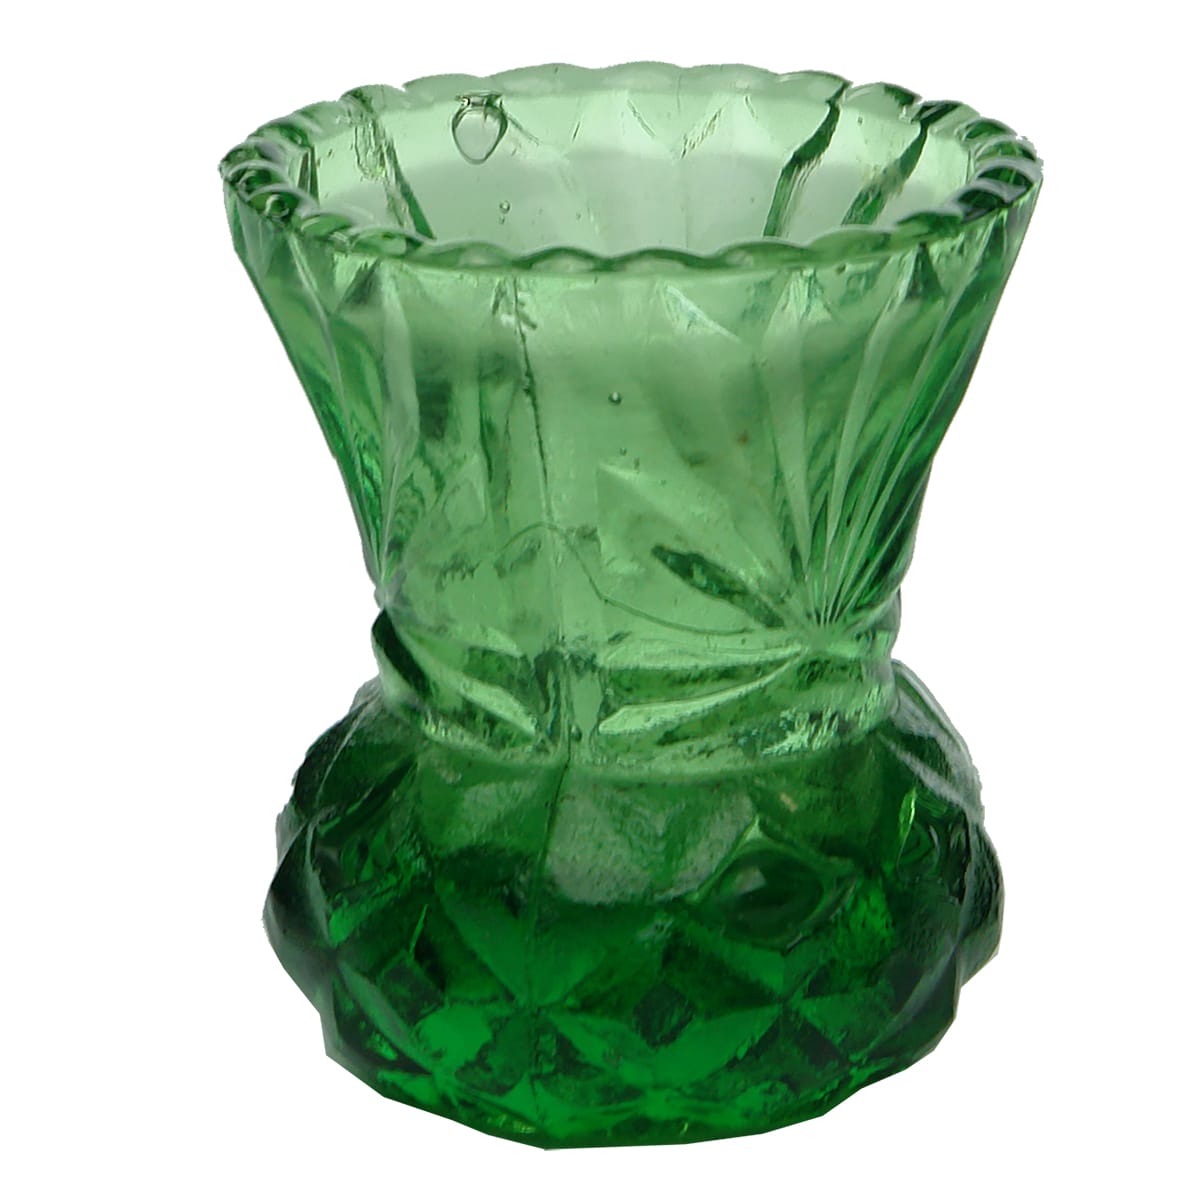 Glassware. Very small green thistle vase.